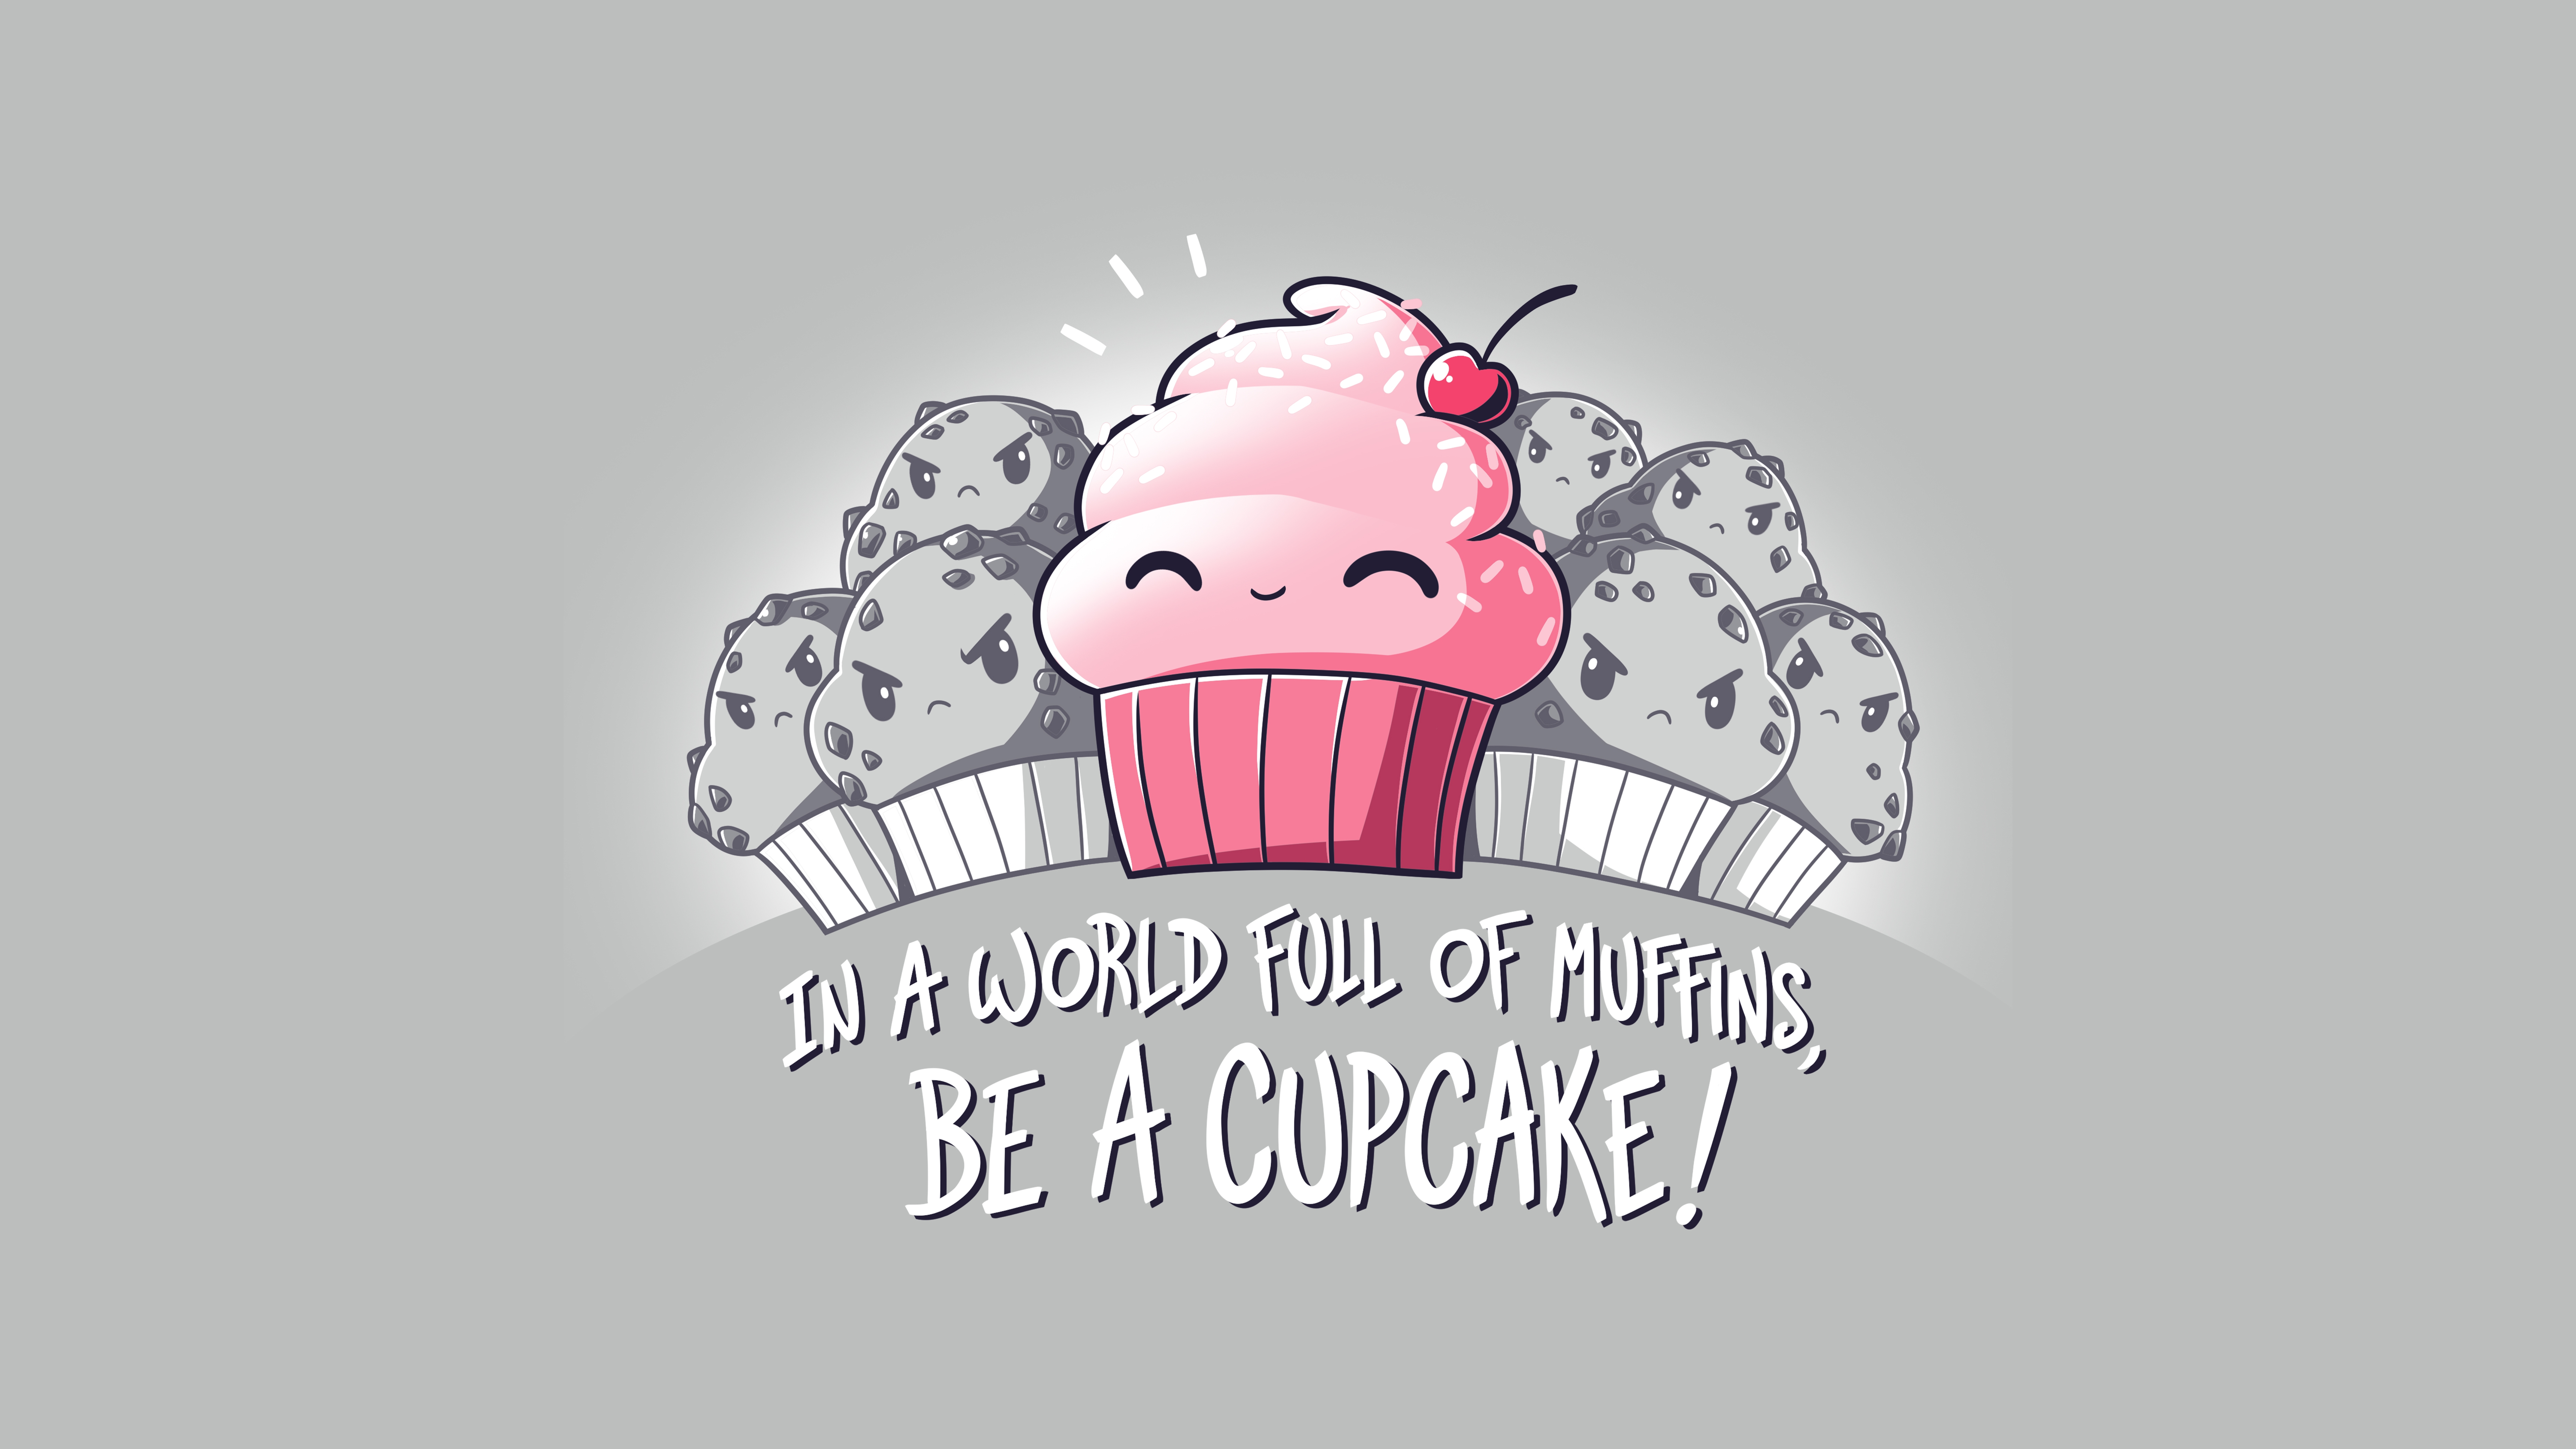 HD wallpaper, Kawaii Cupcake, Cupcake, 5K, Meme, Muffins, Grey Background, Pink, 8K, Cute Quotes